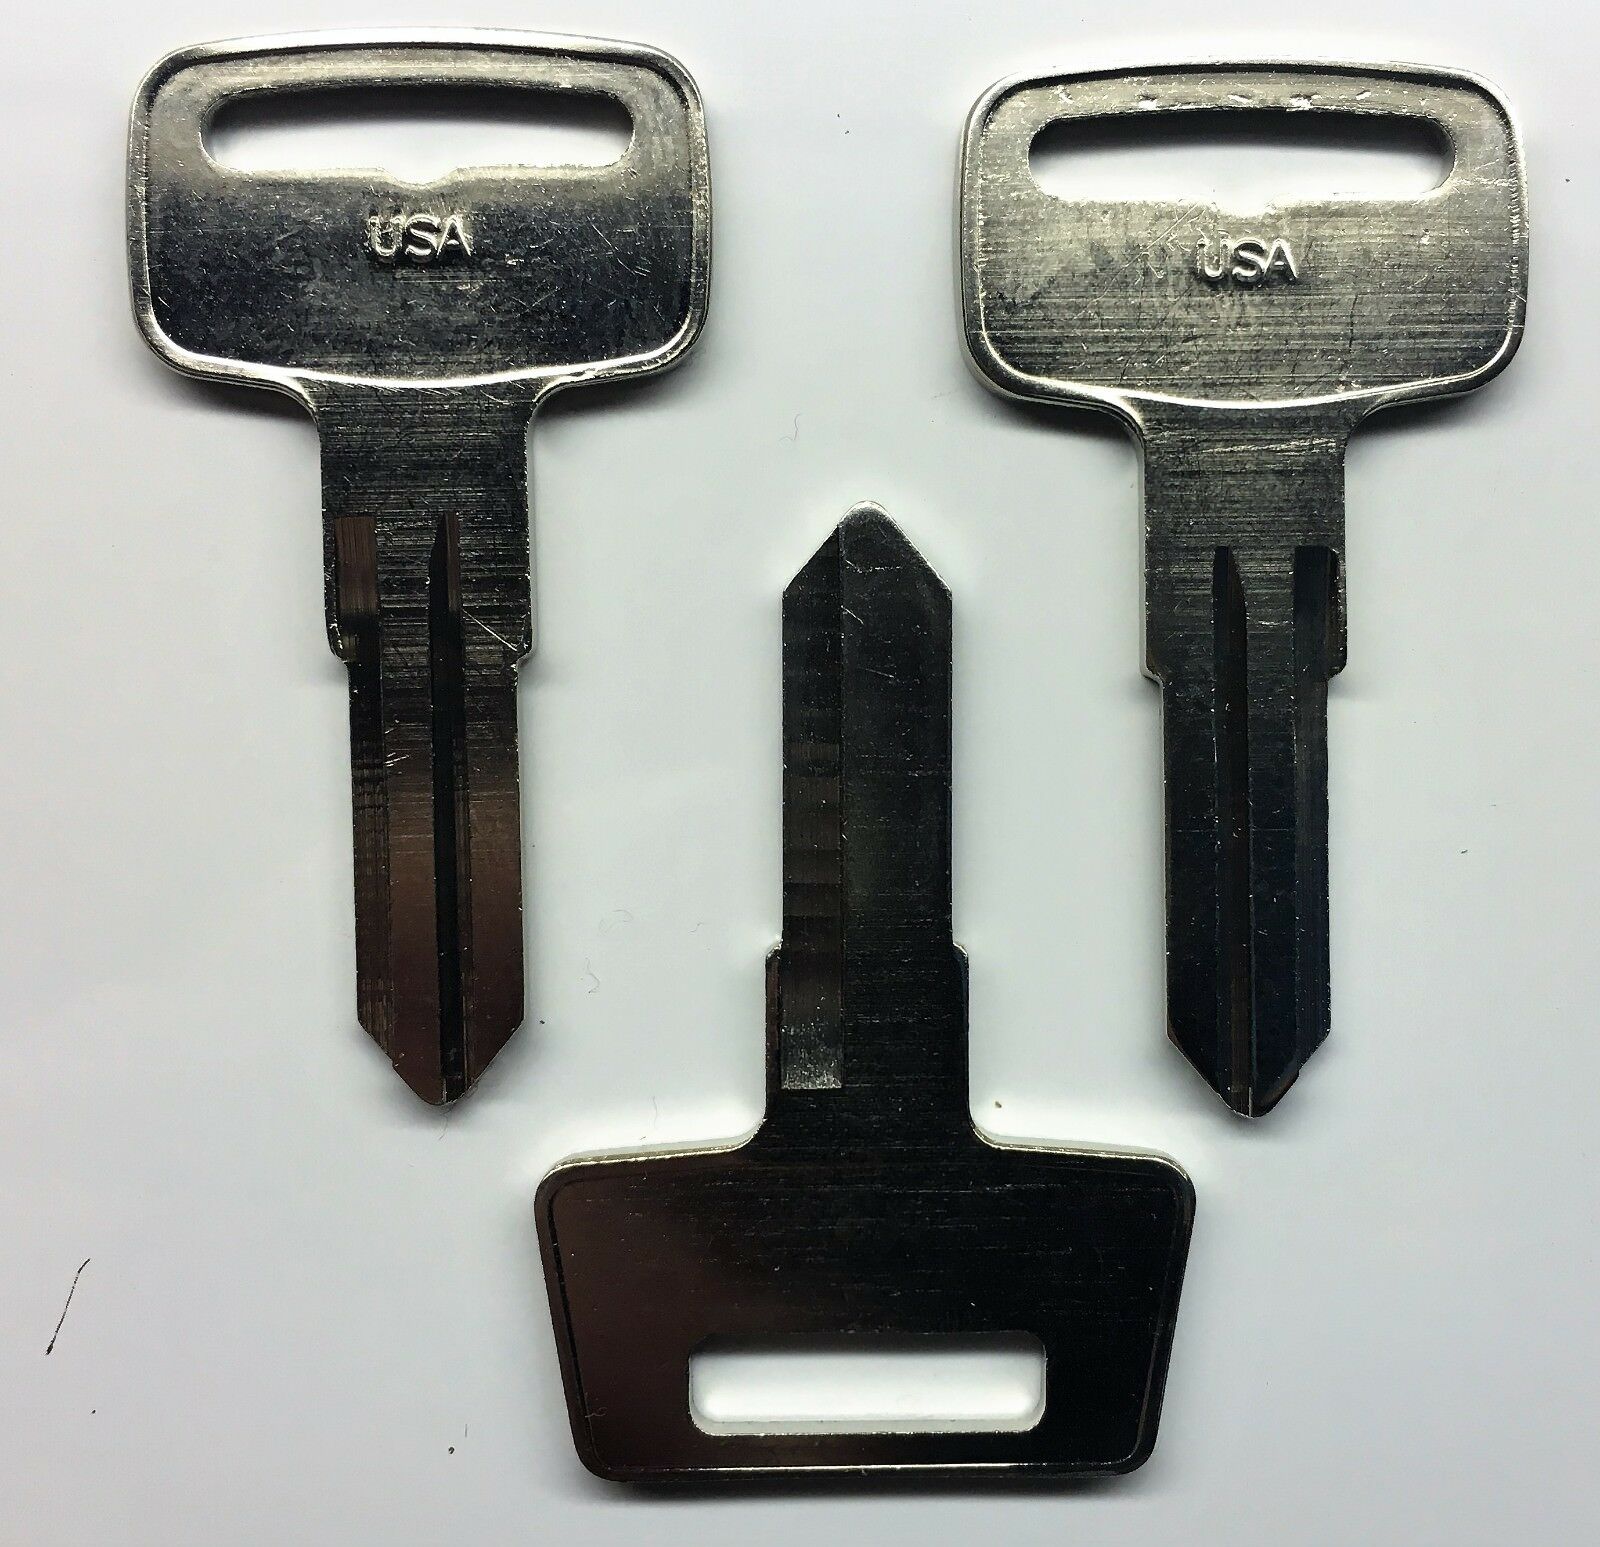 Polaris Atv Ranger Rzr Keys Cut To Code Key💥read Instructions Before Buying